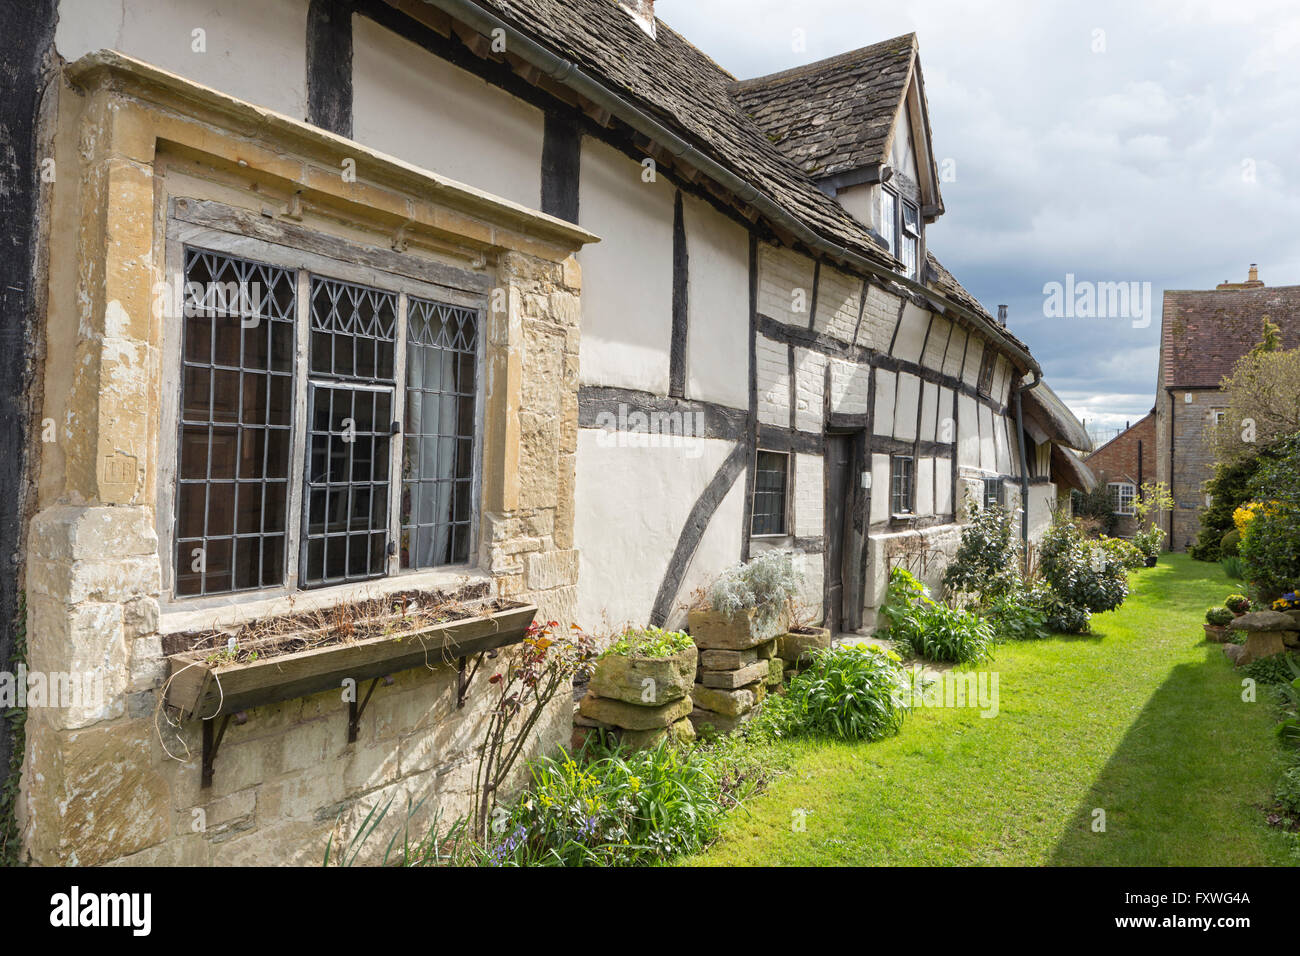 The Fleece Inn public house in the village of Bretforton, Worcestershire, England, UK Stock Photo